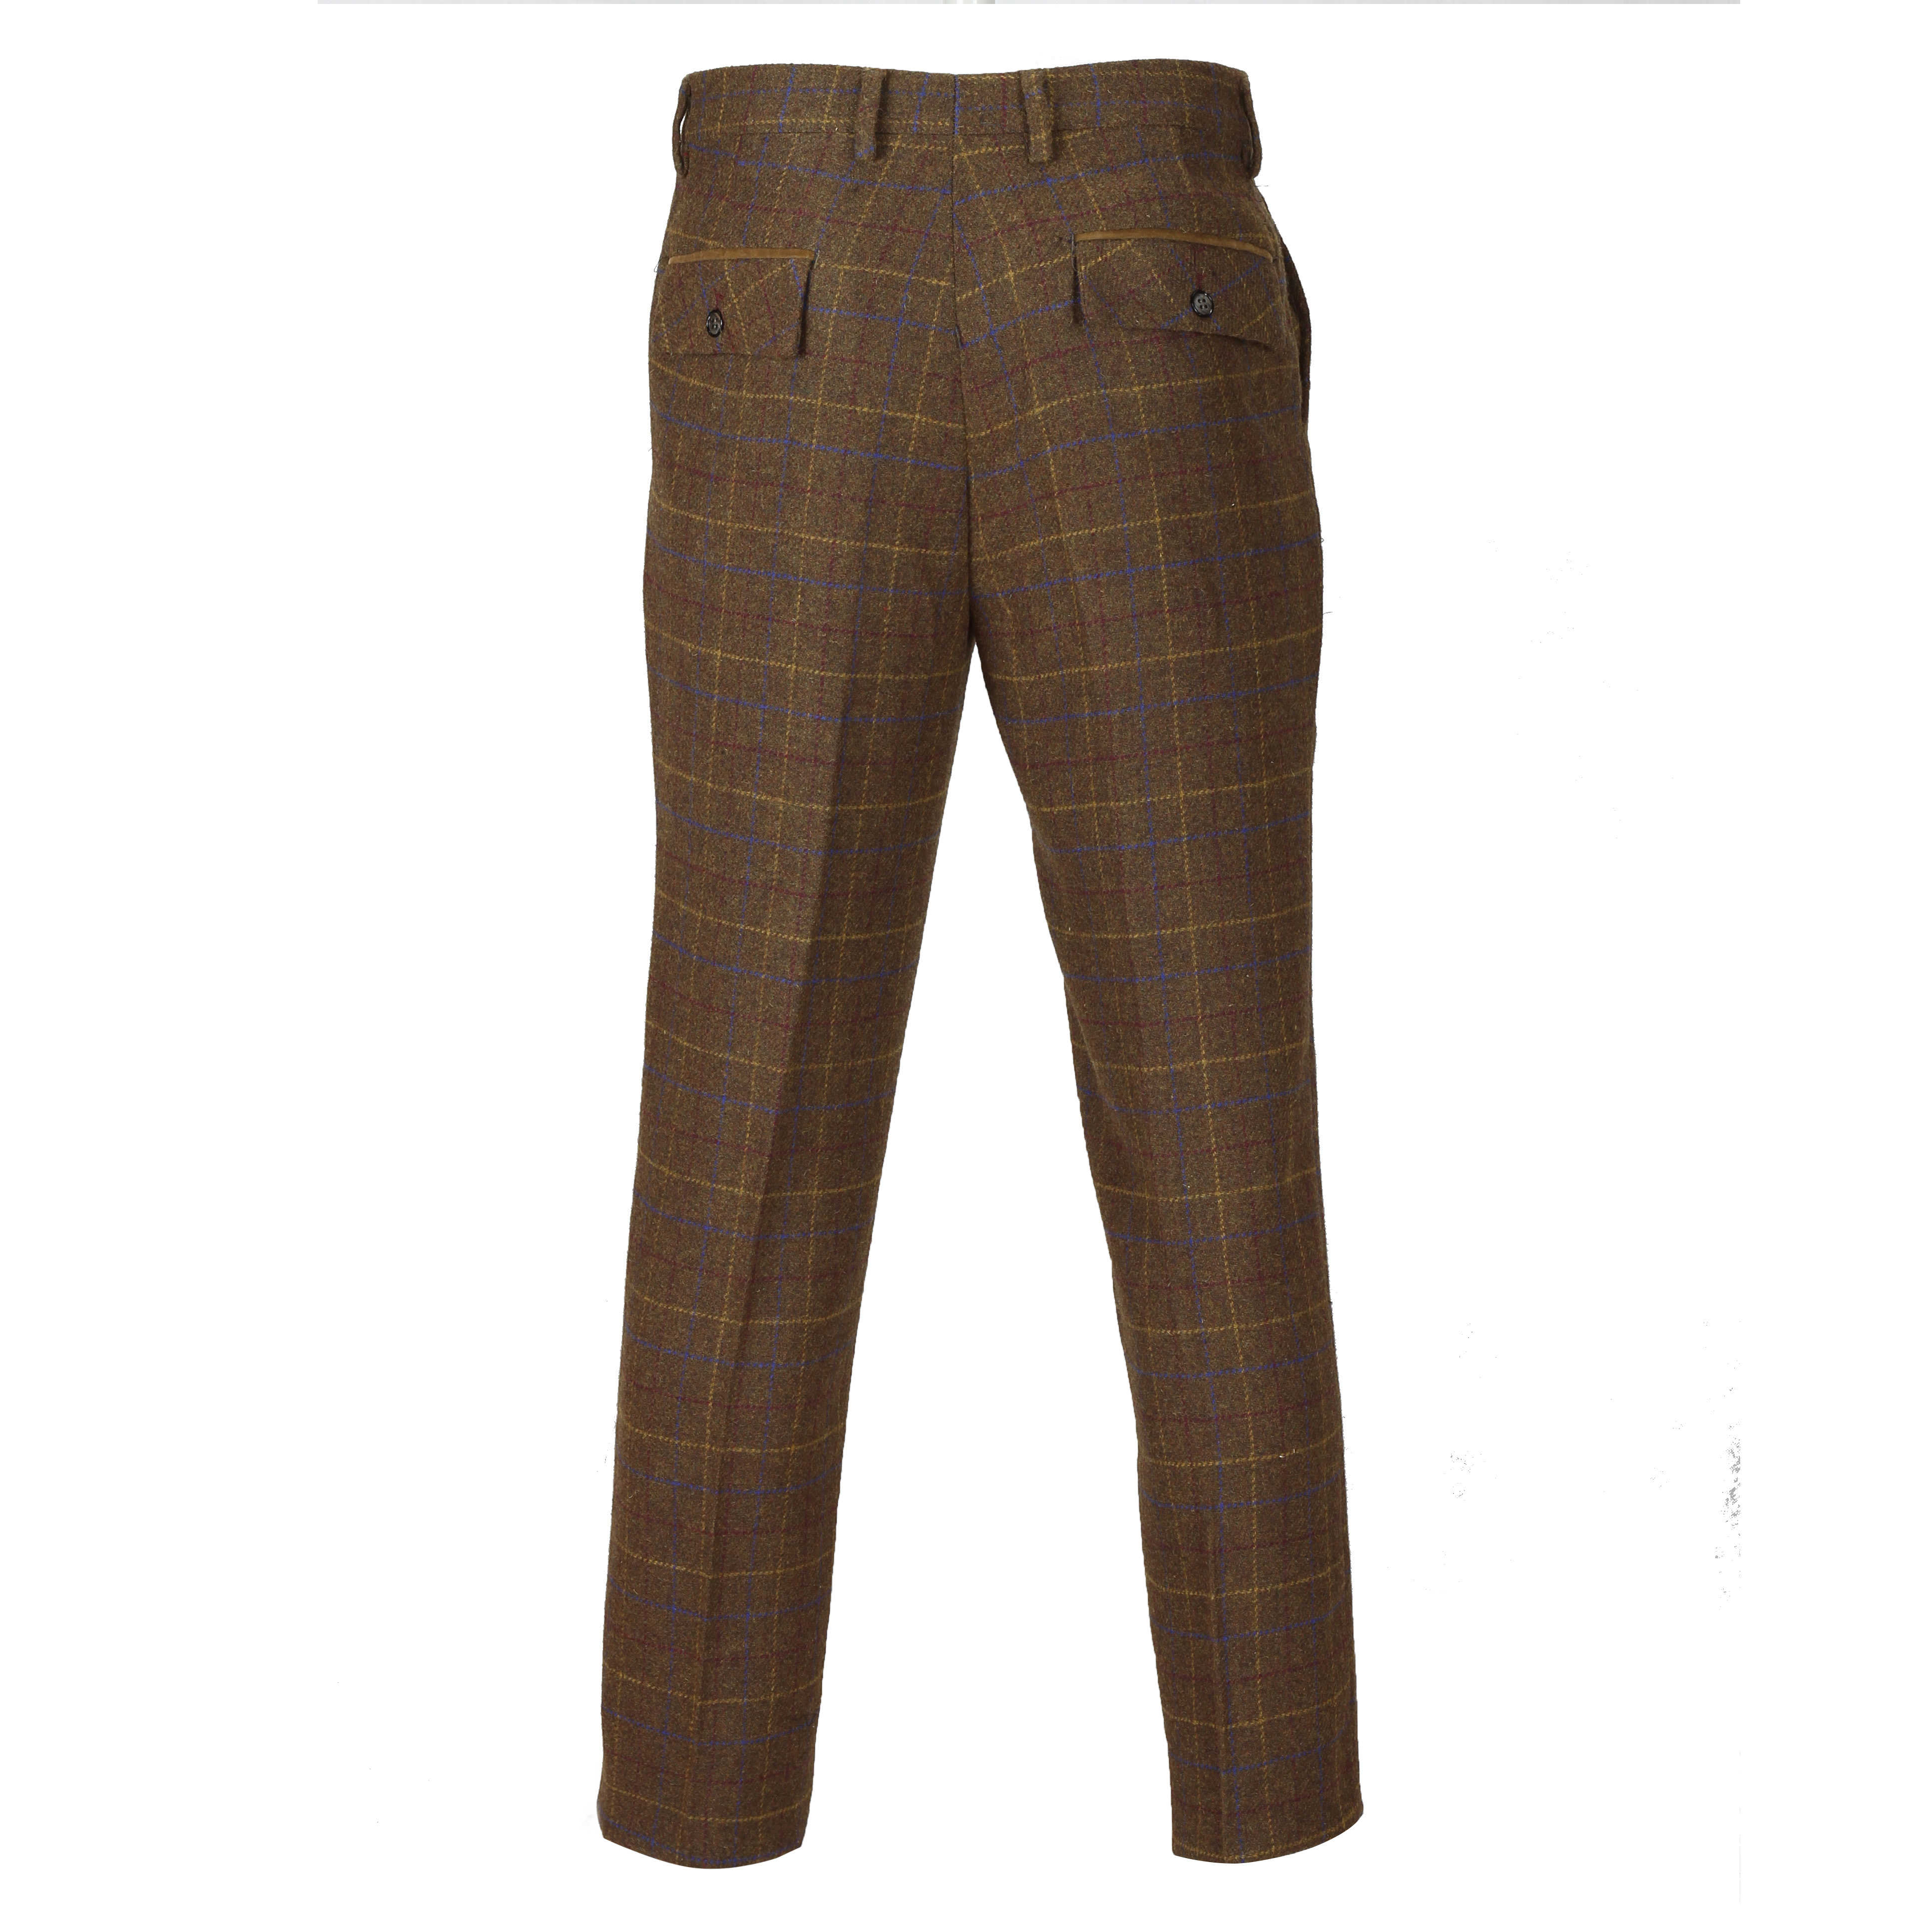 Mens Herringbone Trousers Vintage Style Tweed Check Tailored Fit Smart Casual Ebay